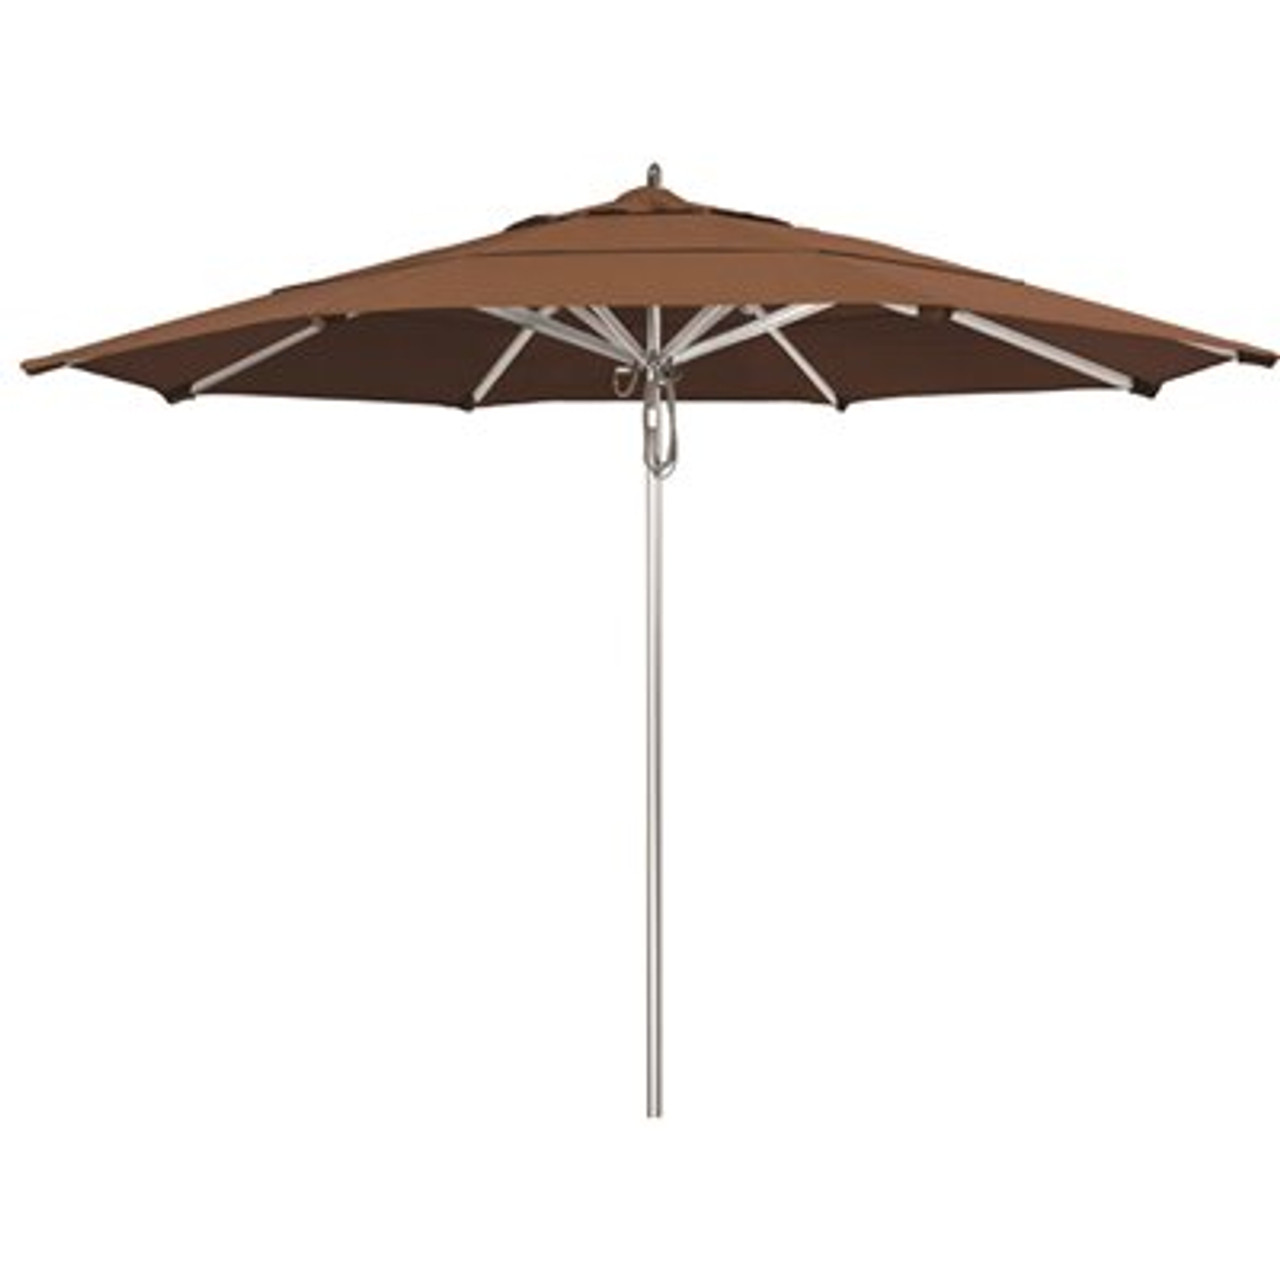 California Umbrella 11 ft. Silver Aluminum Commercial Market Patio Umbrella with Pulley Lift in Teak Sunbrella